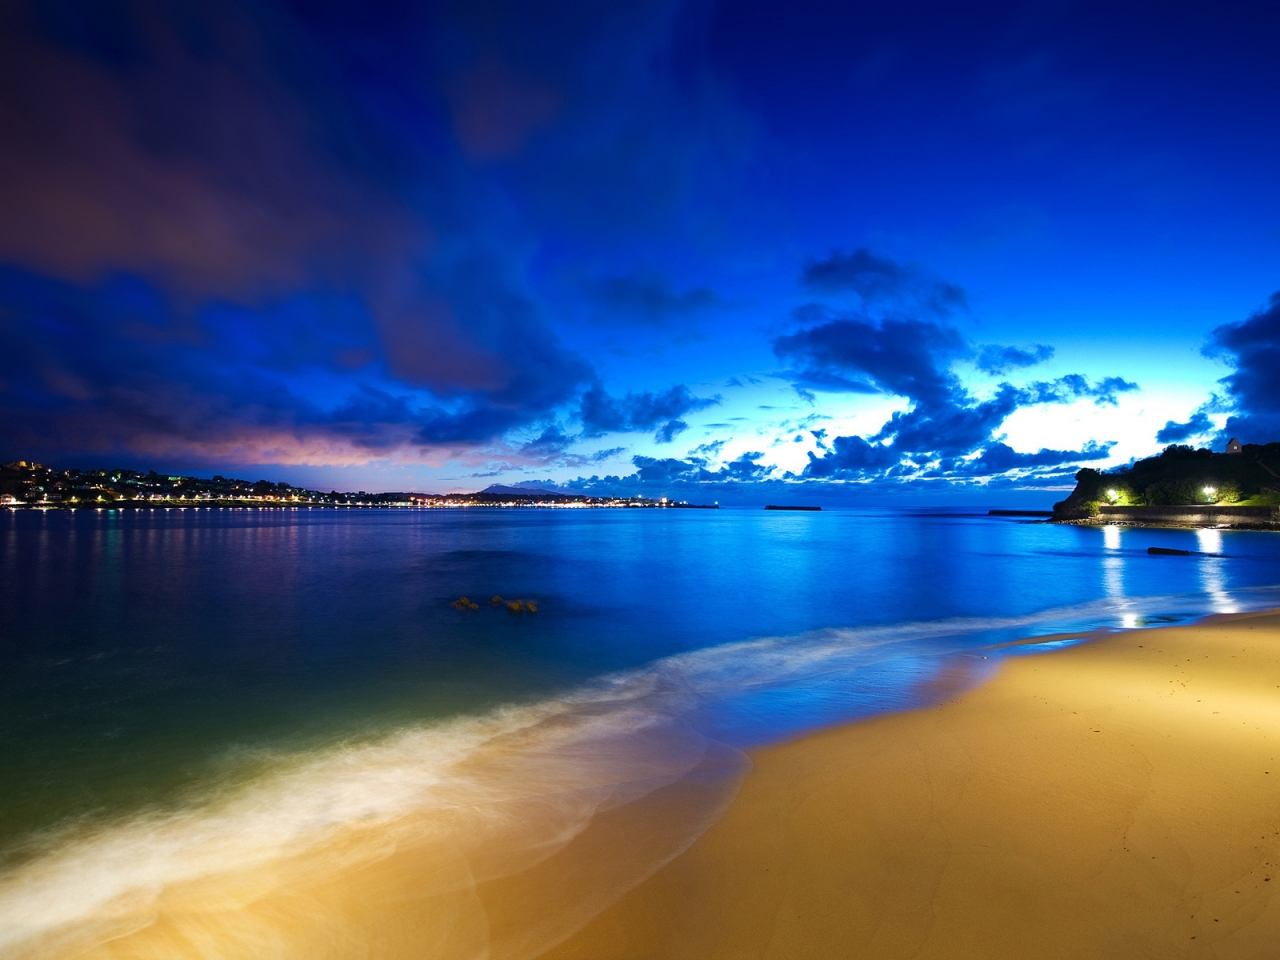 Luxury Beach for 1280 x 960 resolution